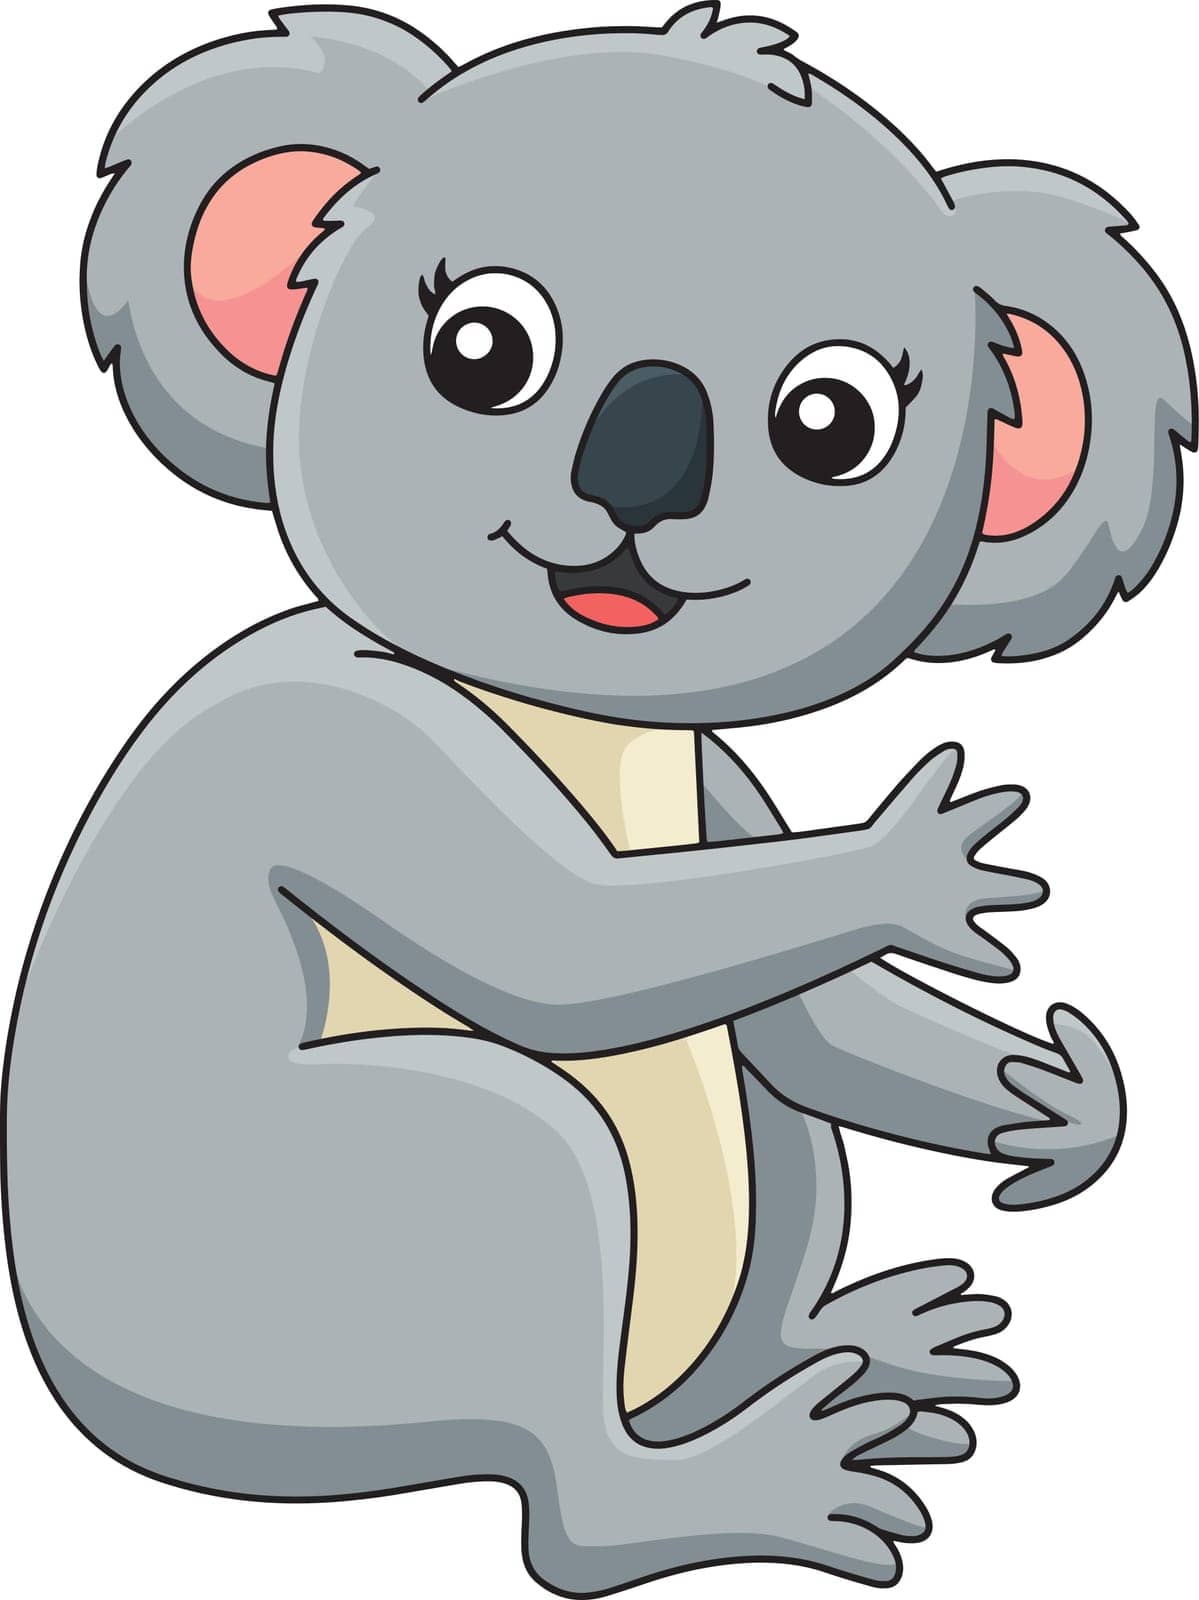 This cartoon clipart shows a Koala illustration.